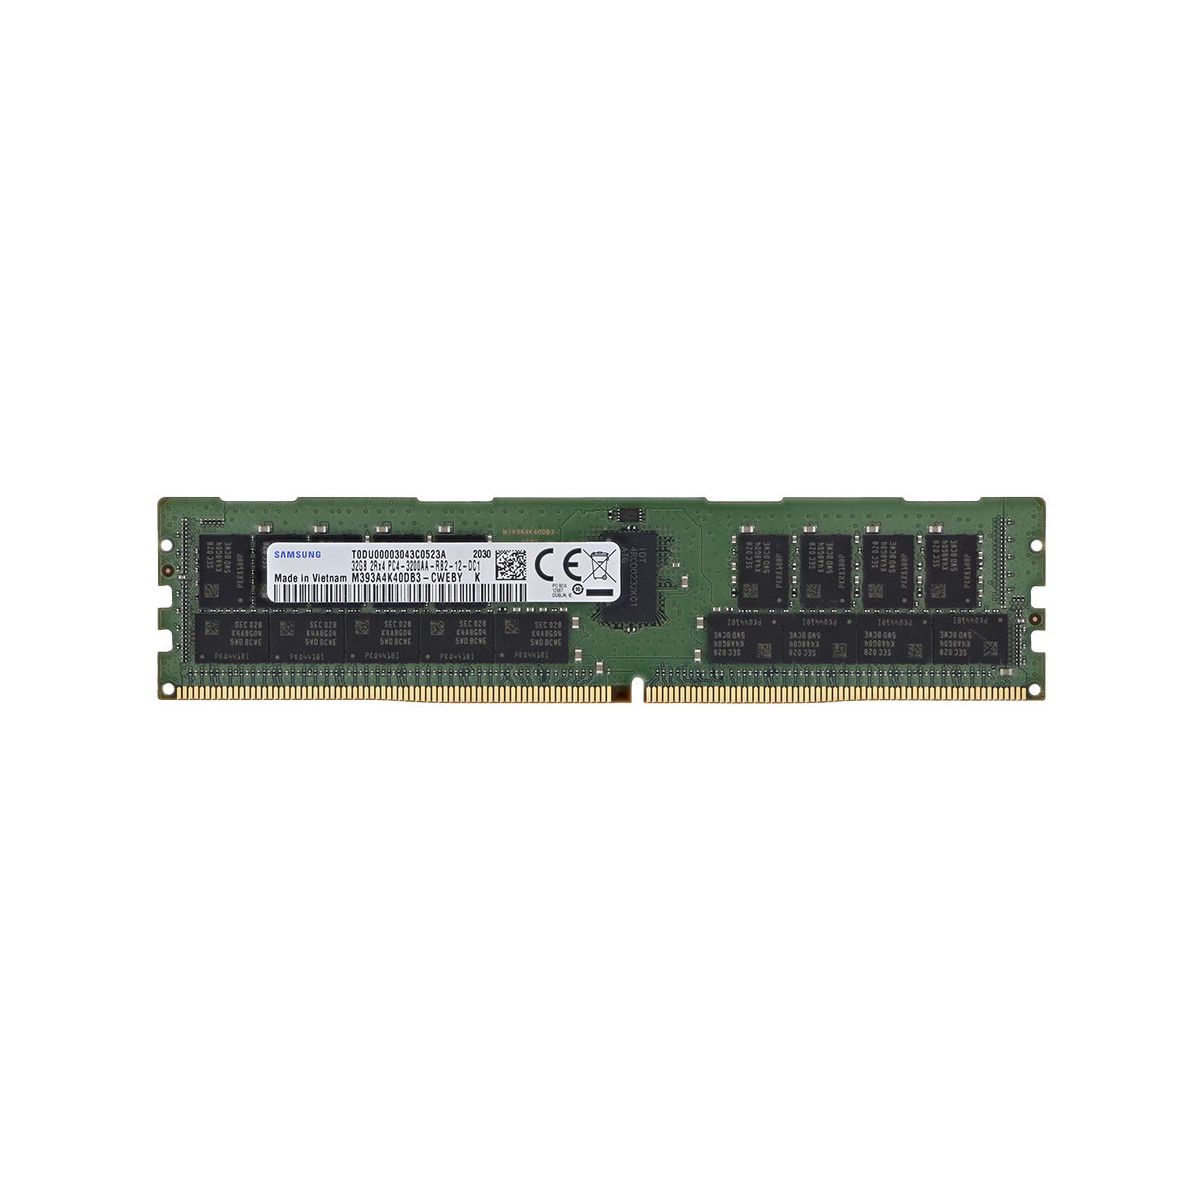 P07646‐H21-MS - Memstar 1x 32GB DDR4-3200 RDIMM PC4-25600R - Mem-star Compatible OEM Memory 1 - Memstar 